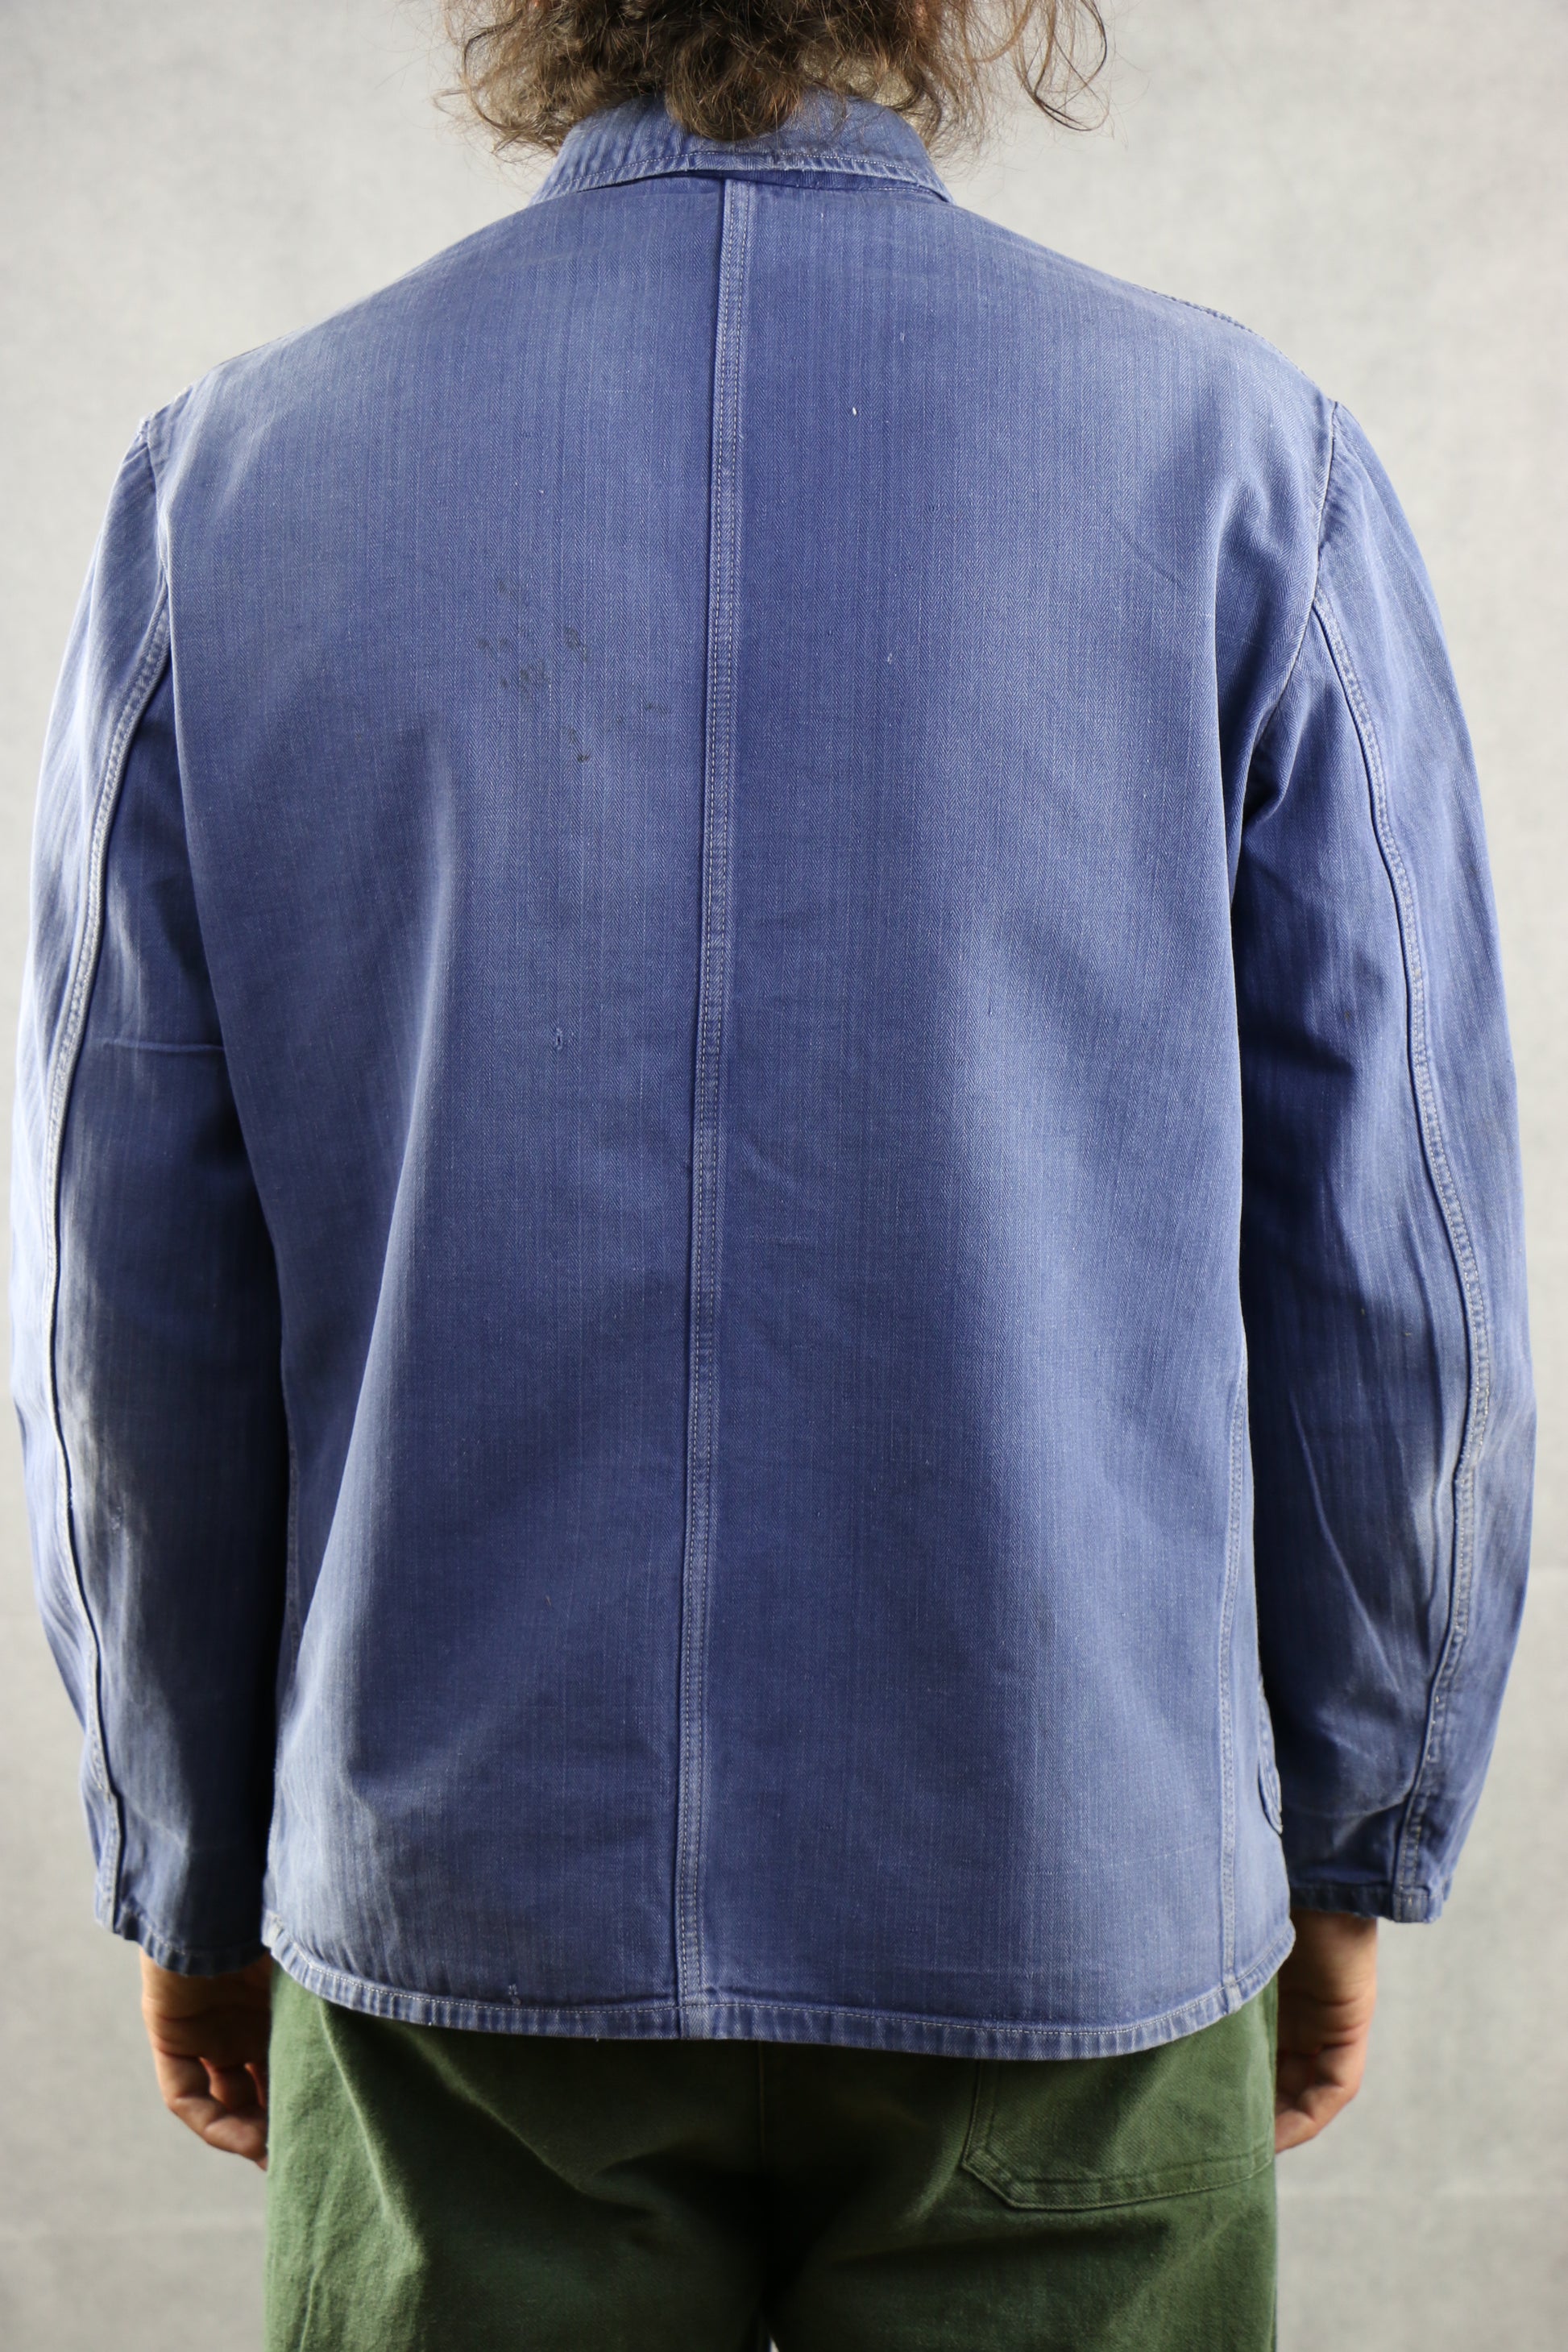 BP Work Jacket - vintage clothing clochard92.com